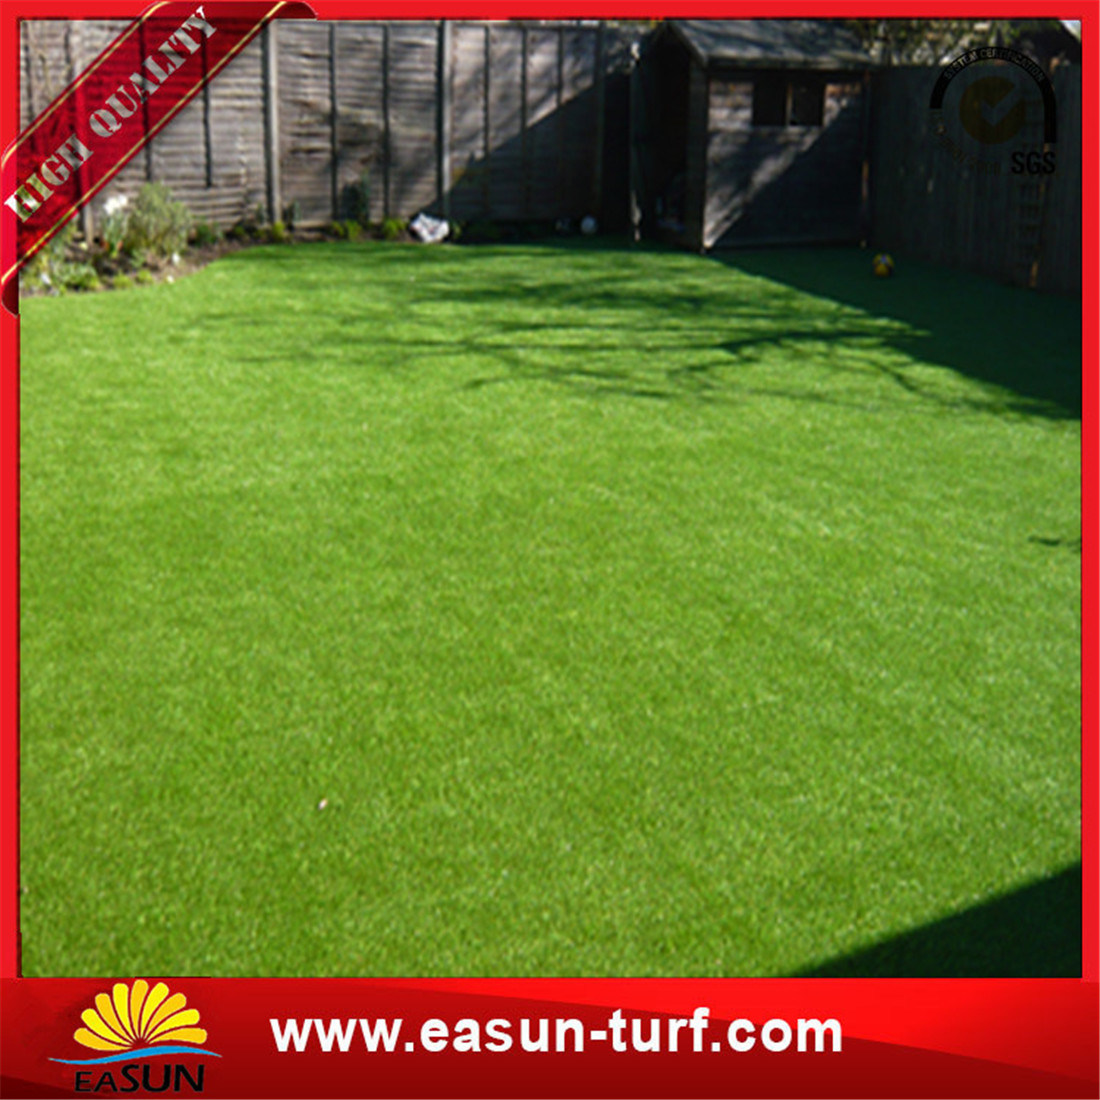 Artificial Commercial Decorative Garden Turf Synthetic Carpet Grass Turf